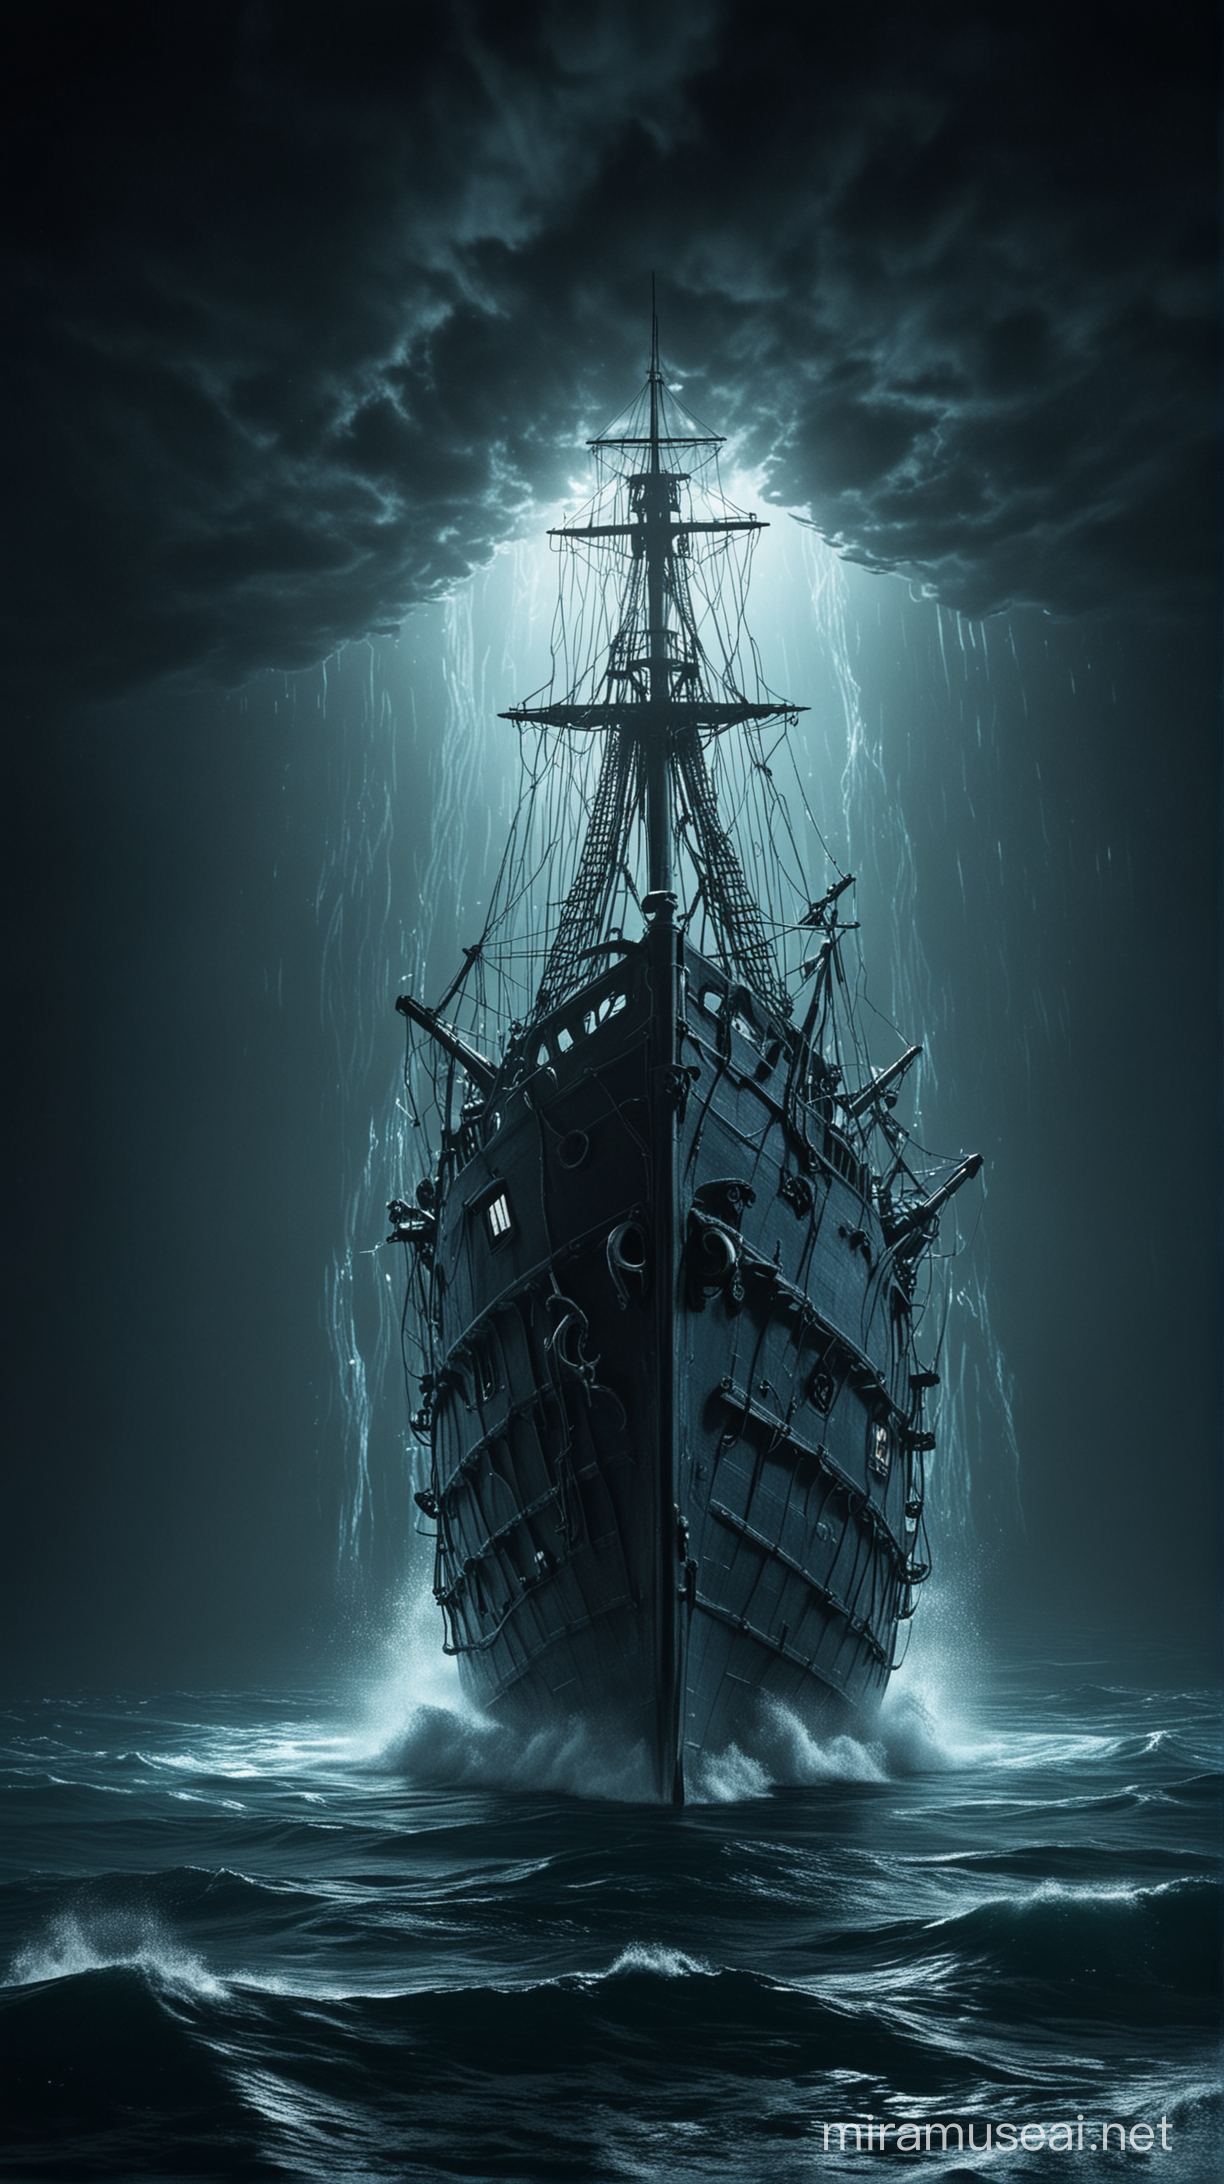 Ghost Ship Encounter Haunting on the Dark Blue Sea